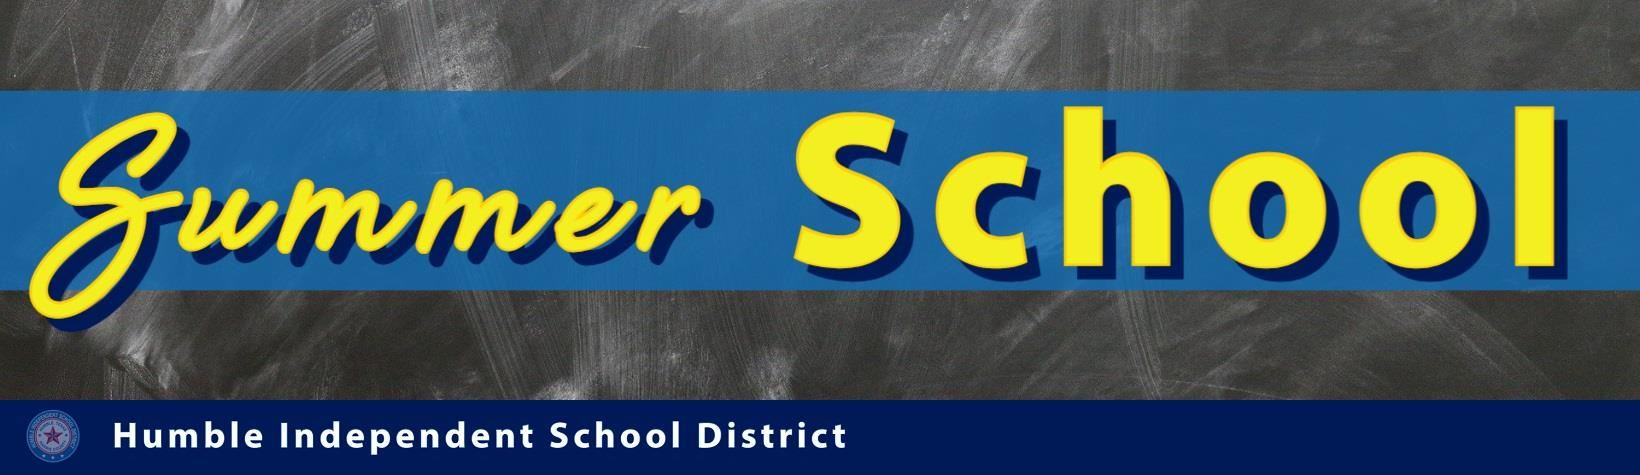 Summer School banner